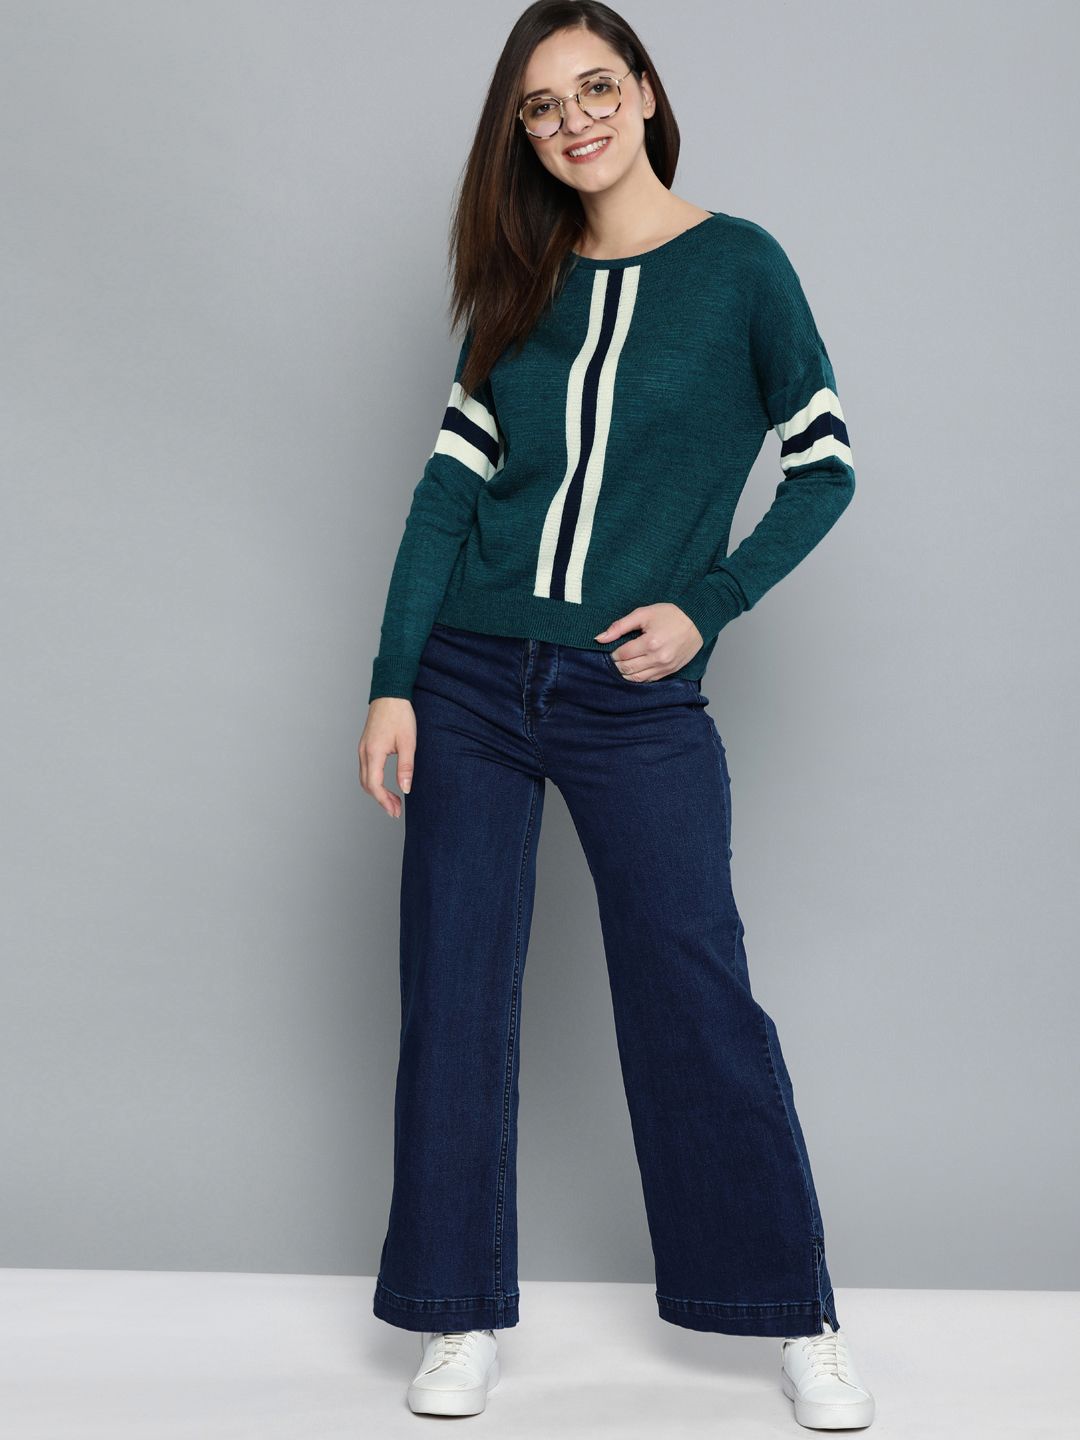 Mast & Harbour Women Teal Green Self Design Sweater Price in India